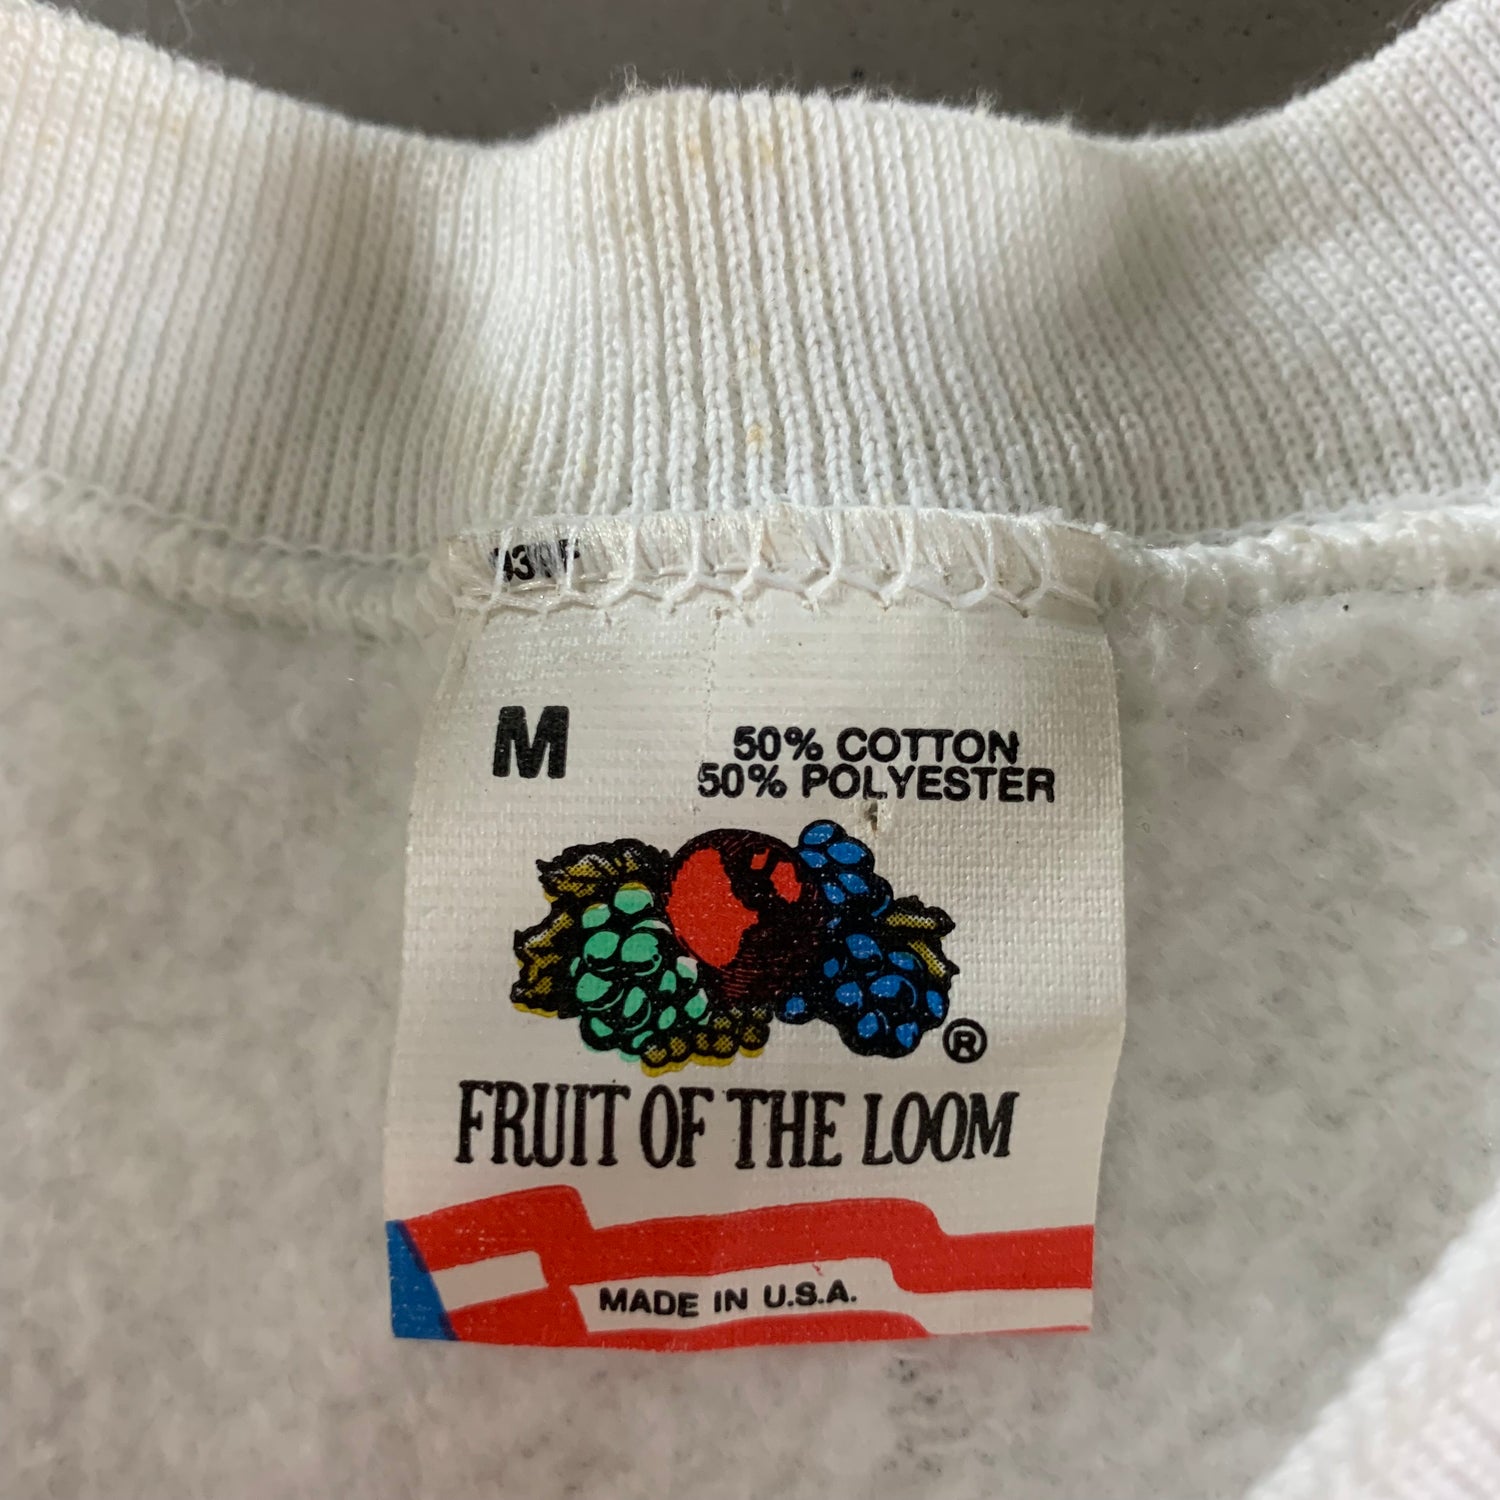 Vintage 1990s Operation Desert Storm Sweatshirt size Medium